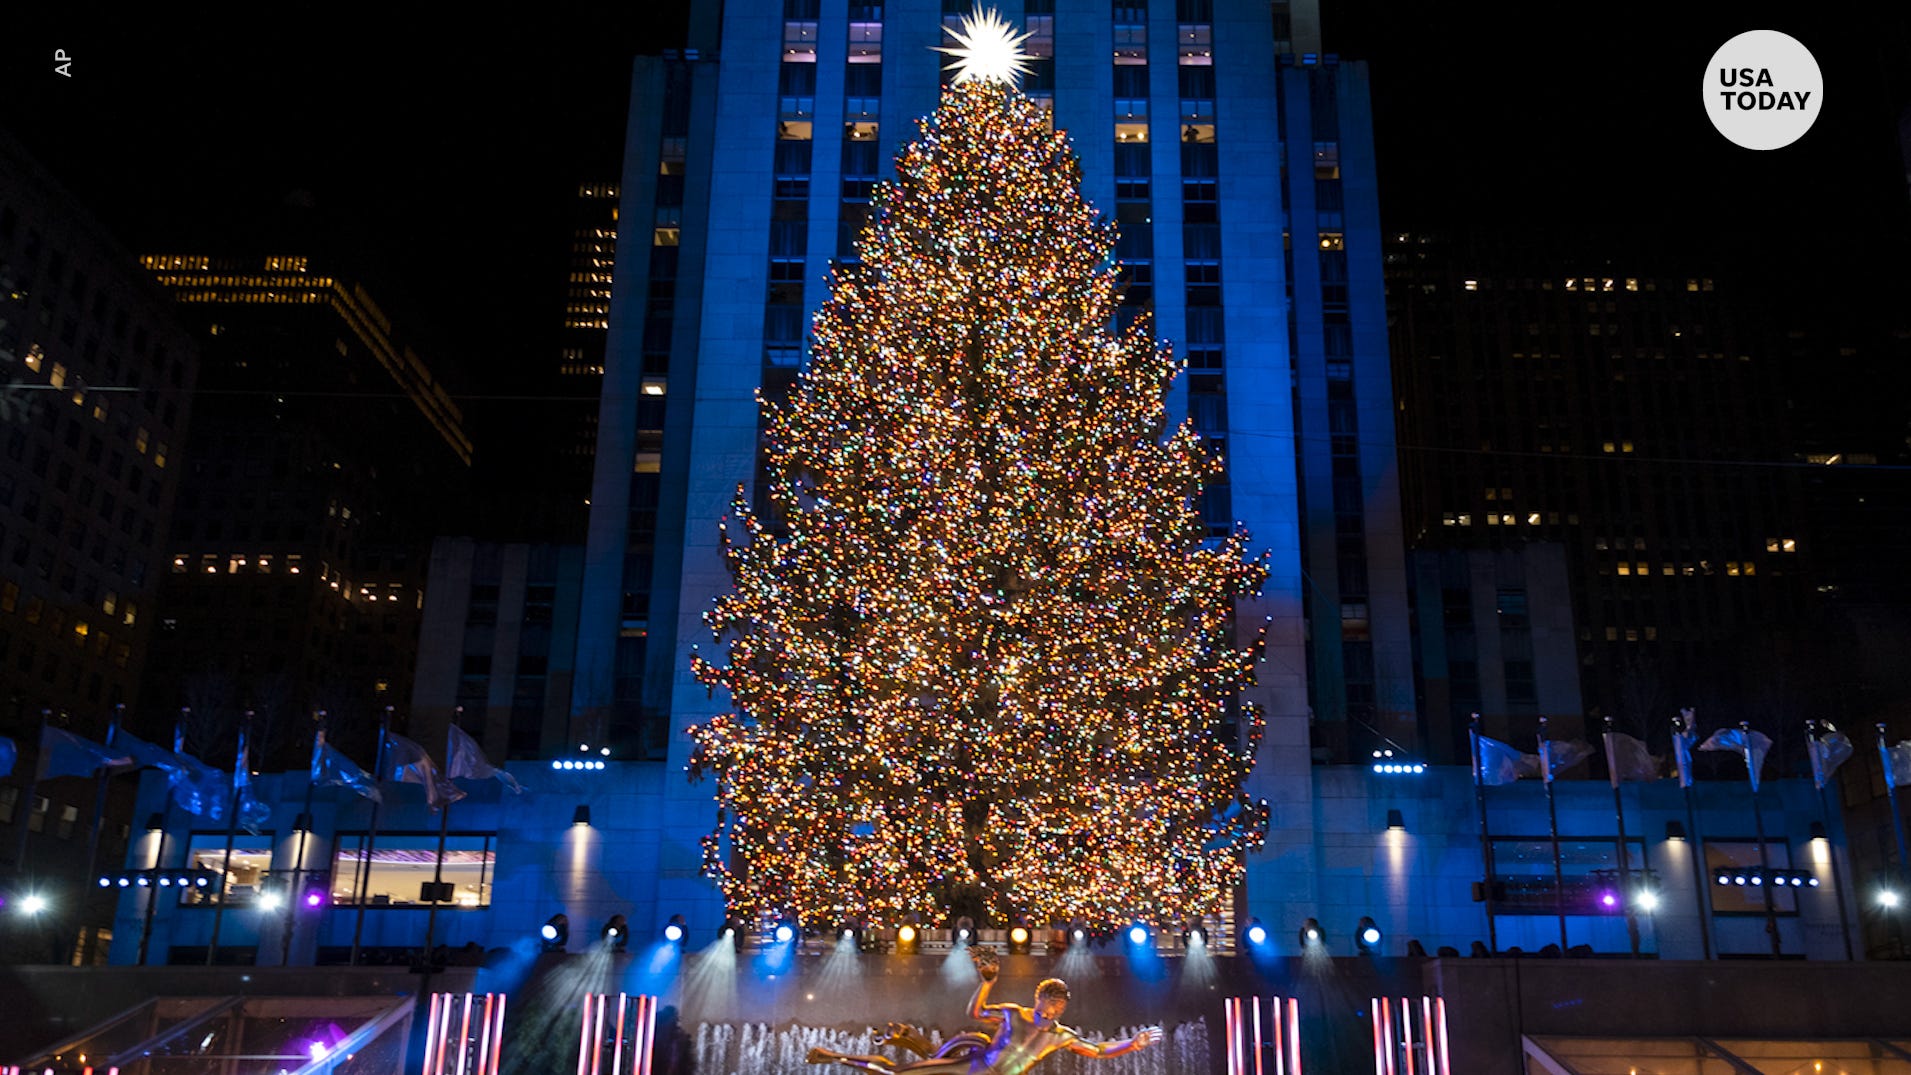 Rockefeller Center Christmas tree dazzles at lighting ceremony